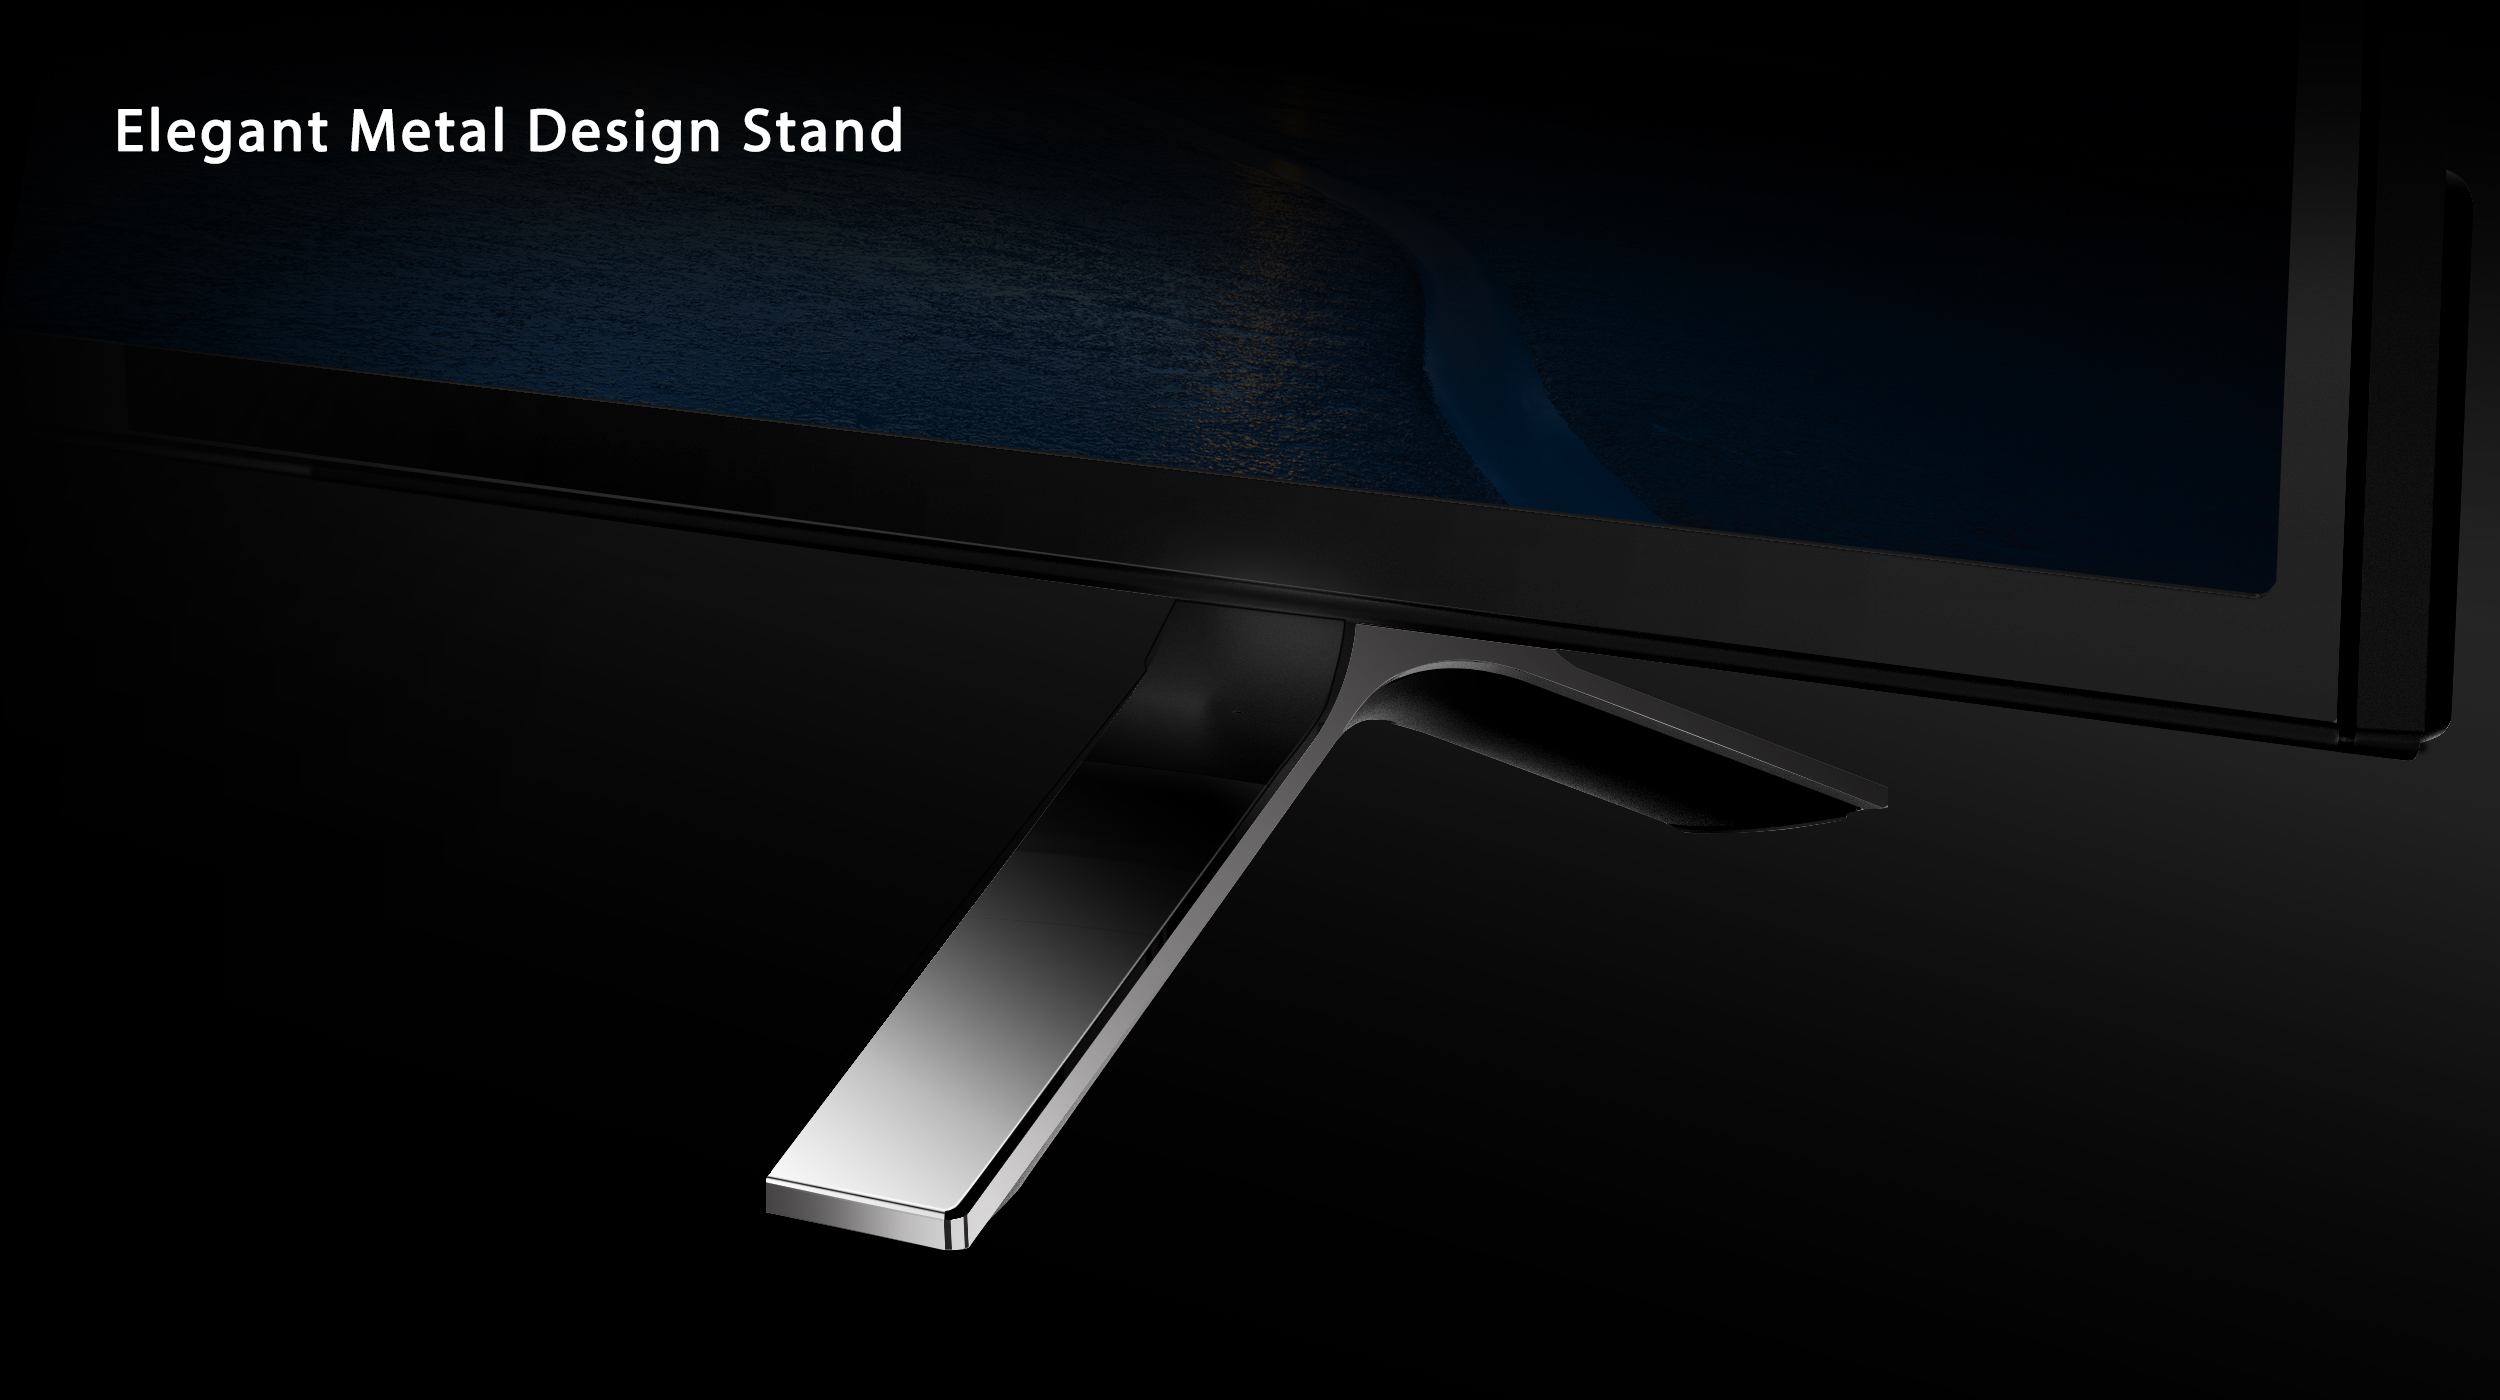 Toshiba 4K Smarter TV with elegant metal design stand